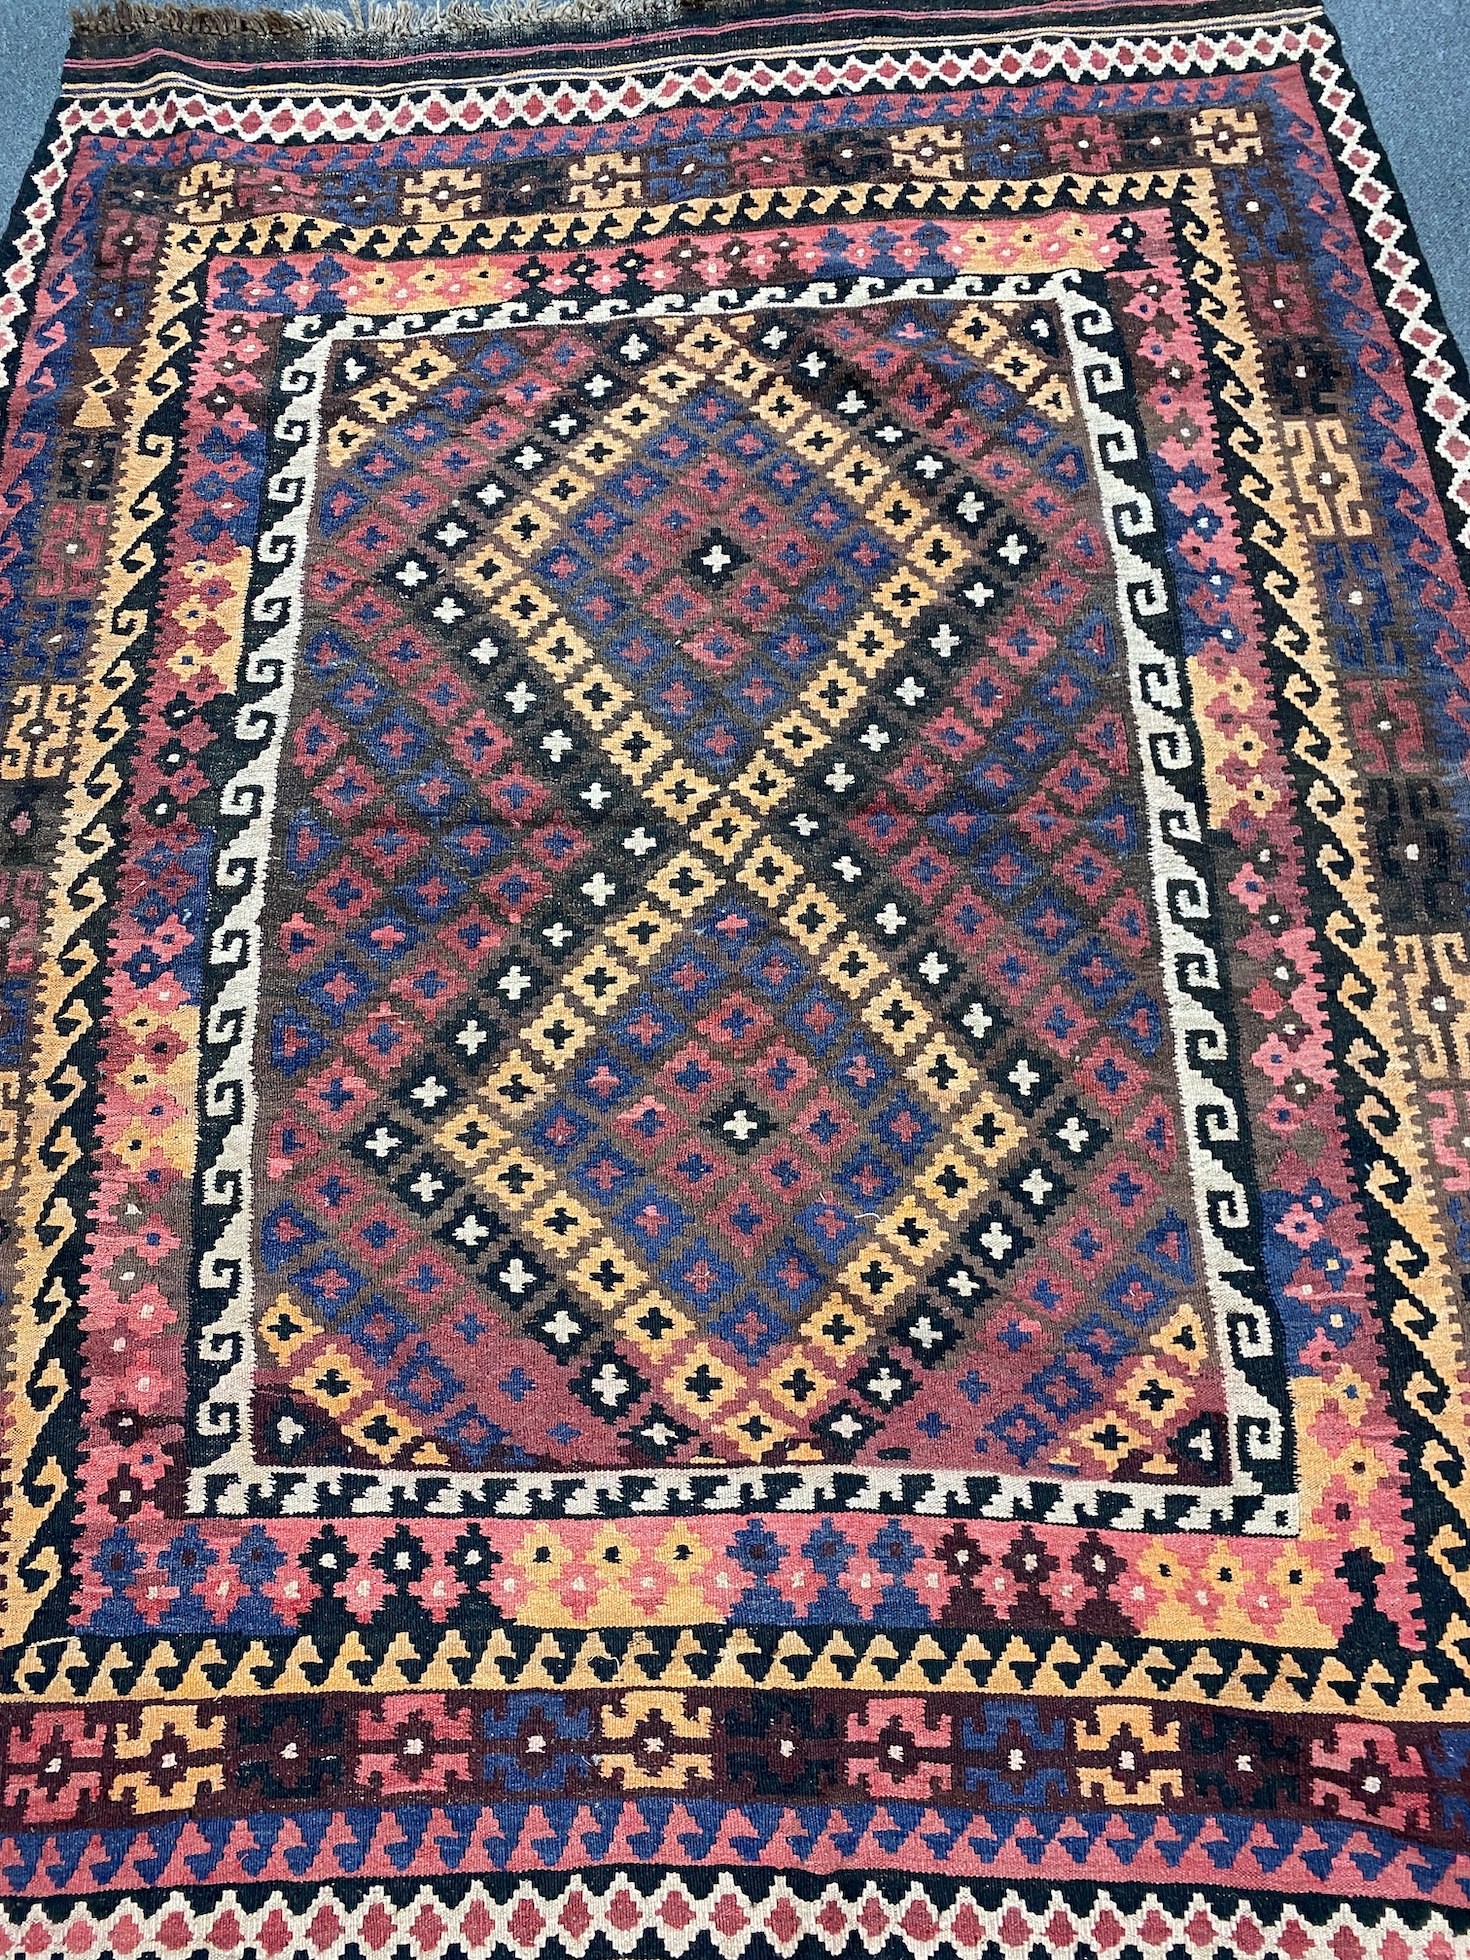 A polychrome flatweave rug, 203 x 160cm